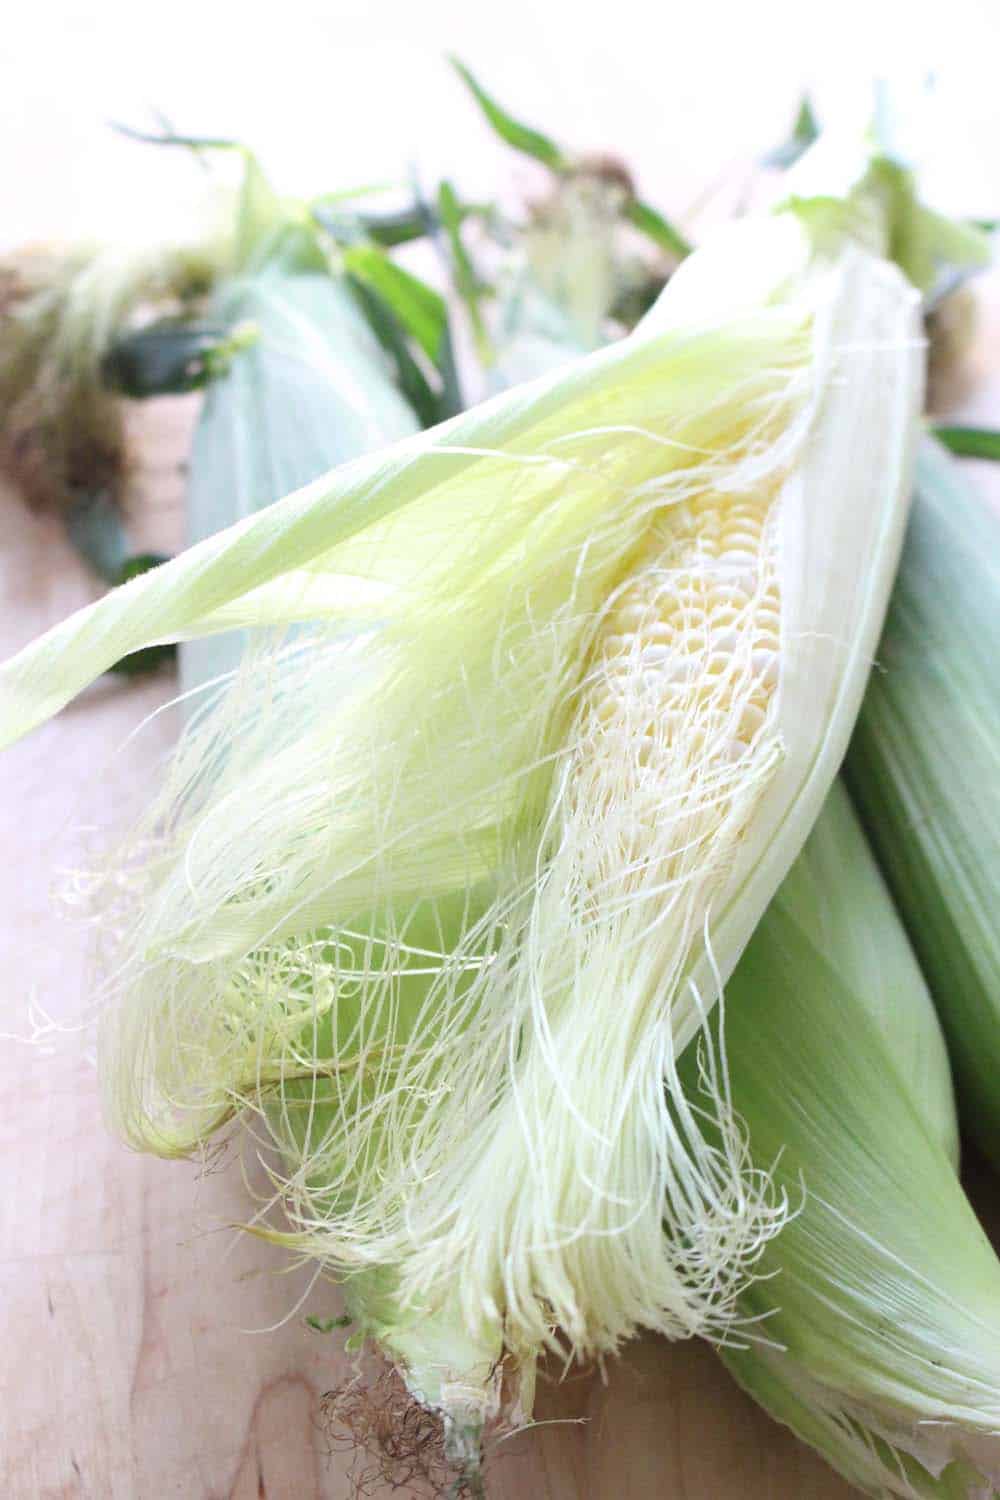 Fresh corn in an open husk.